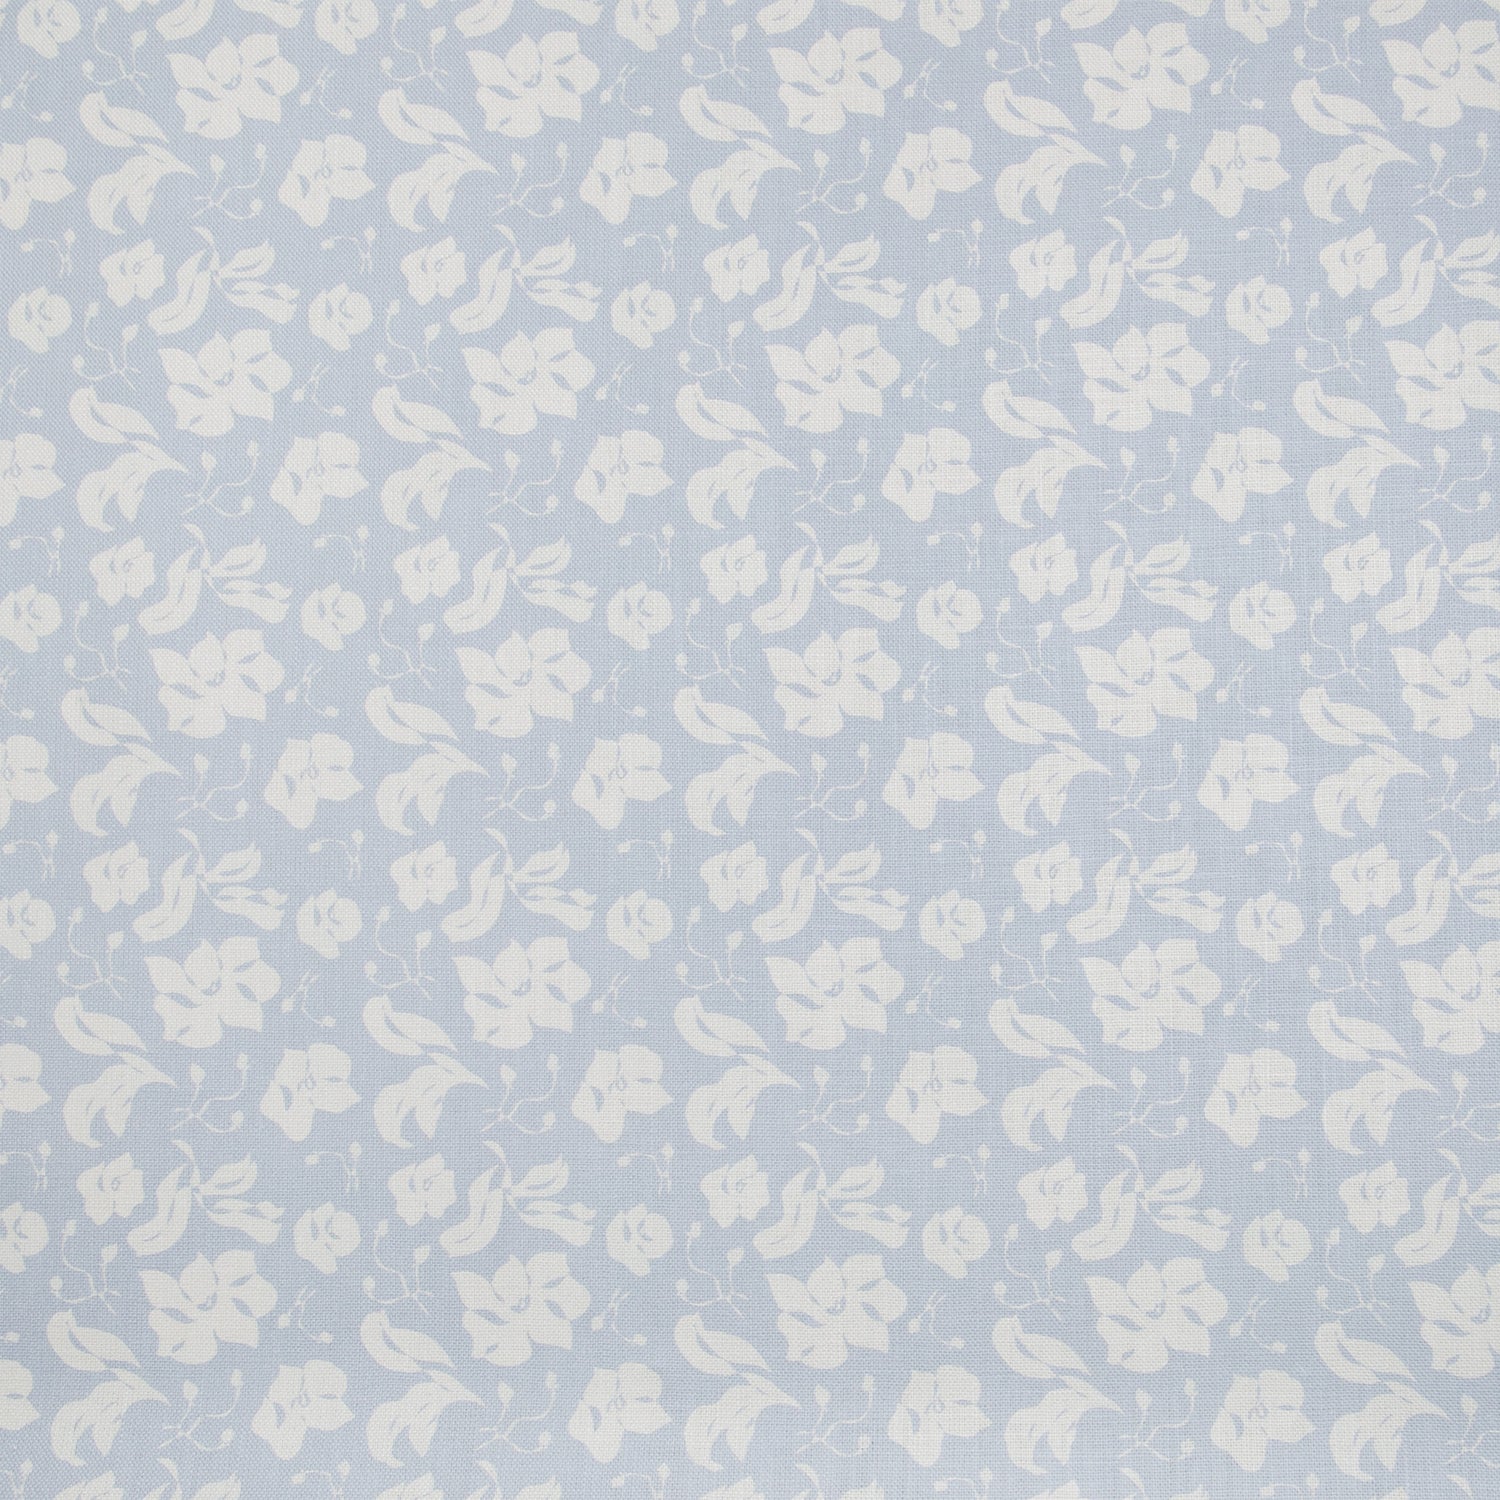 Cornflower Blue Floral Linen Print